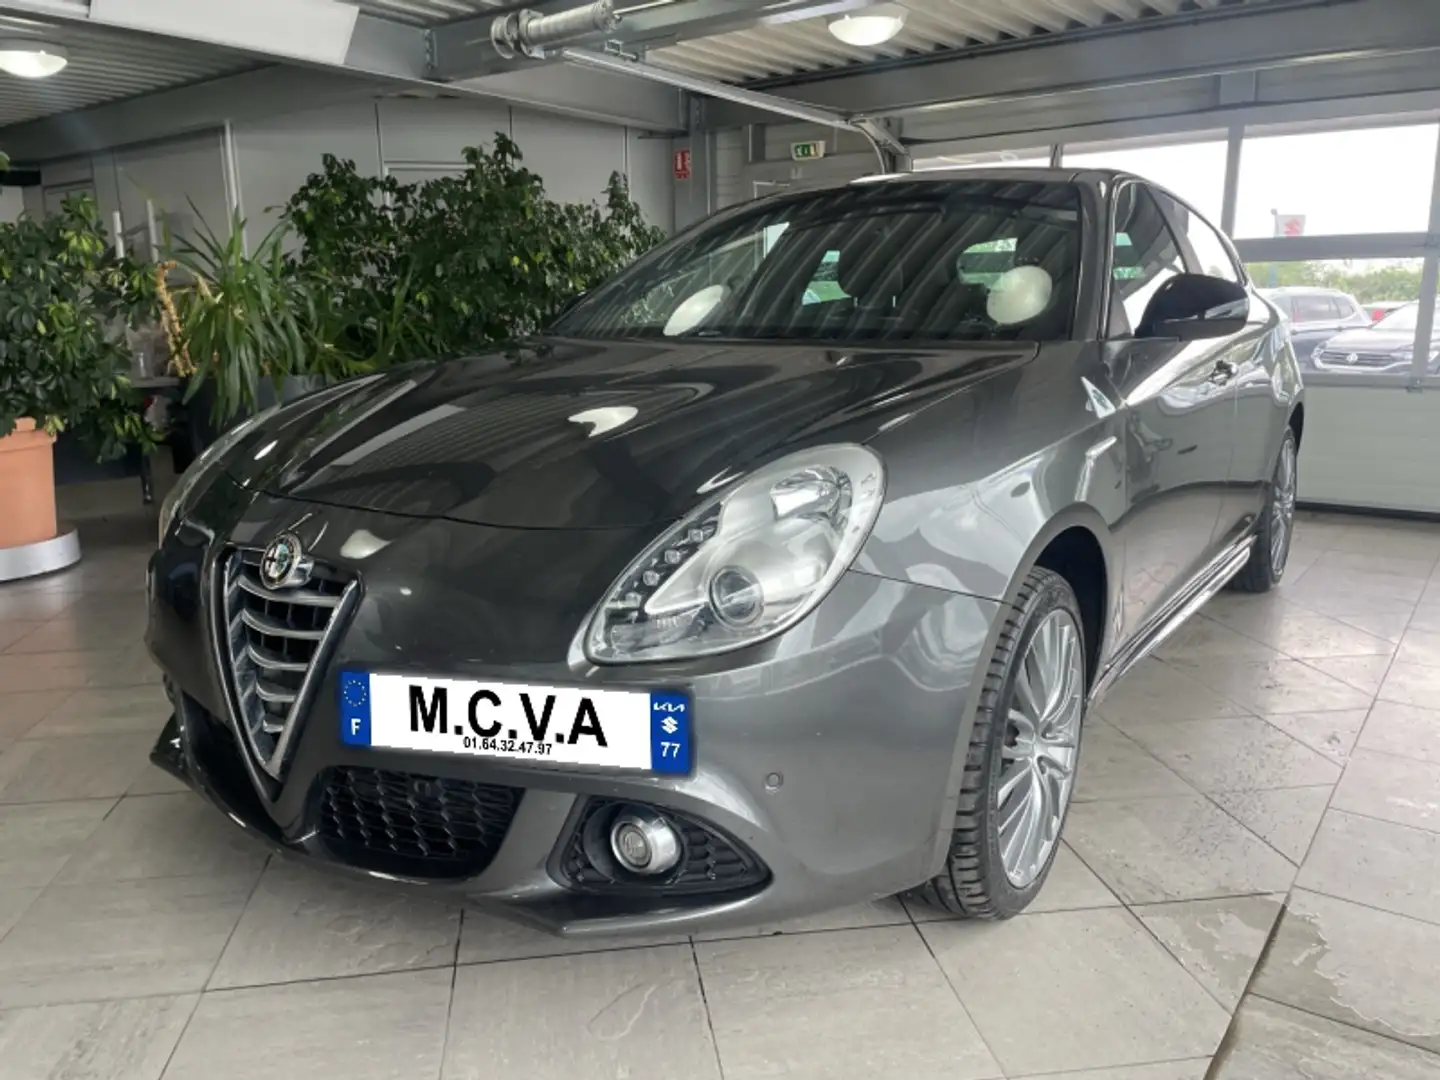 Alfa Romeo Giulietta 2.0 JTDm 150ch Collezione Stop\u0026Start - 2